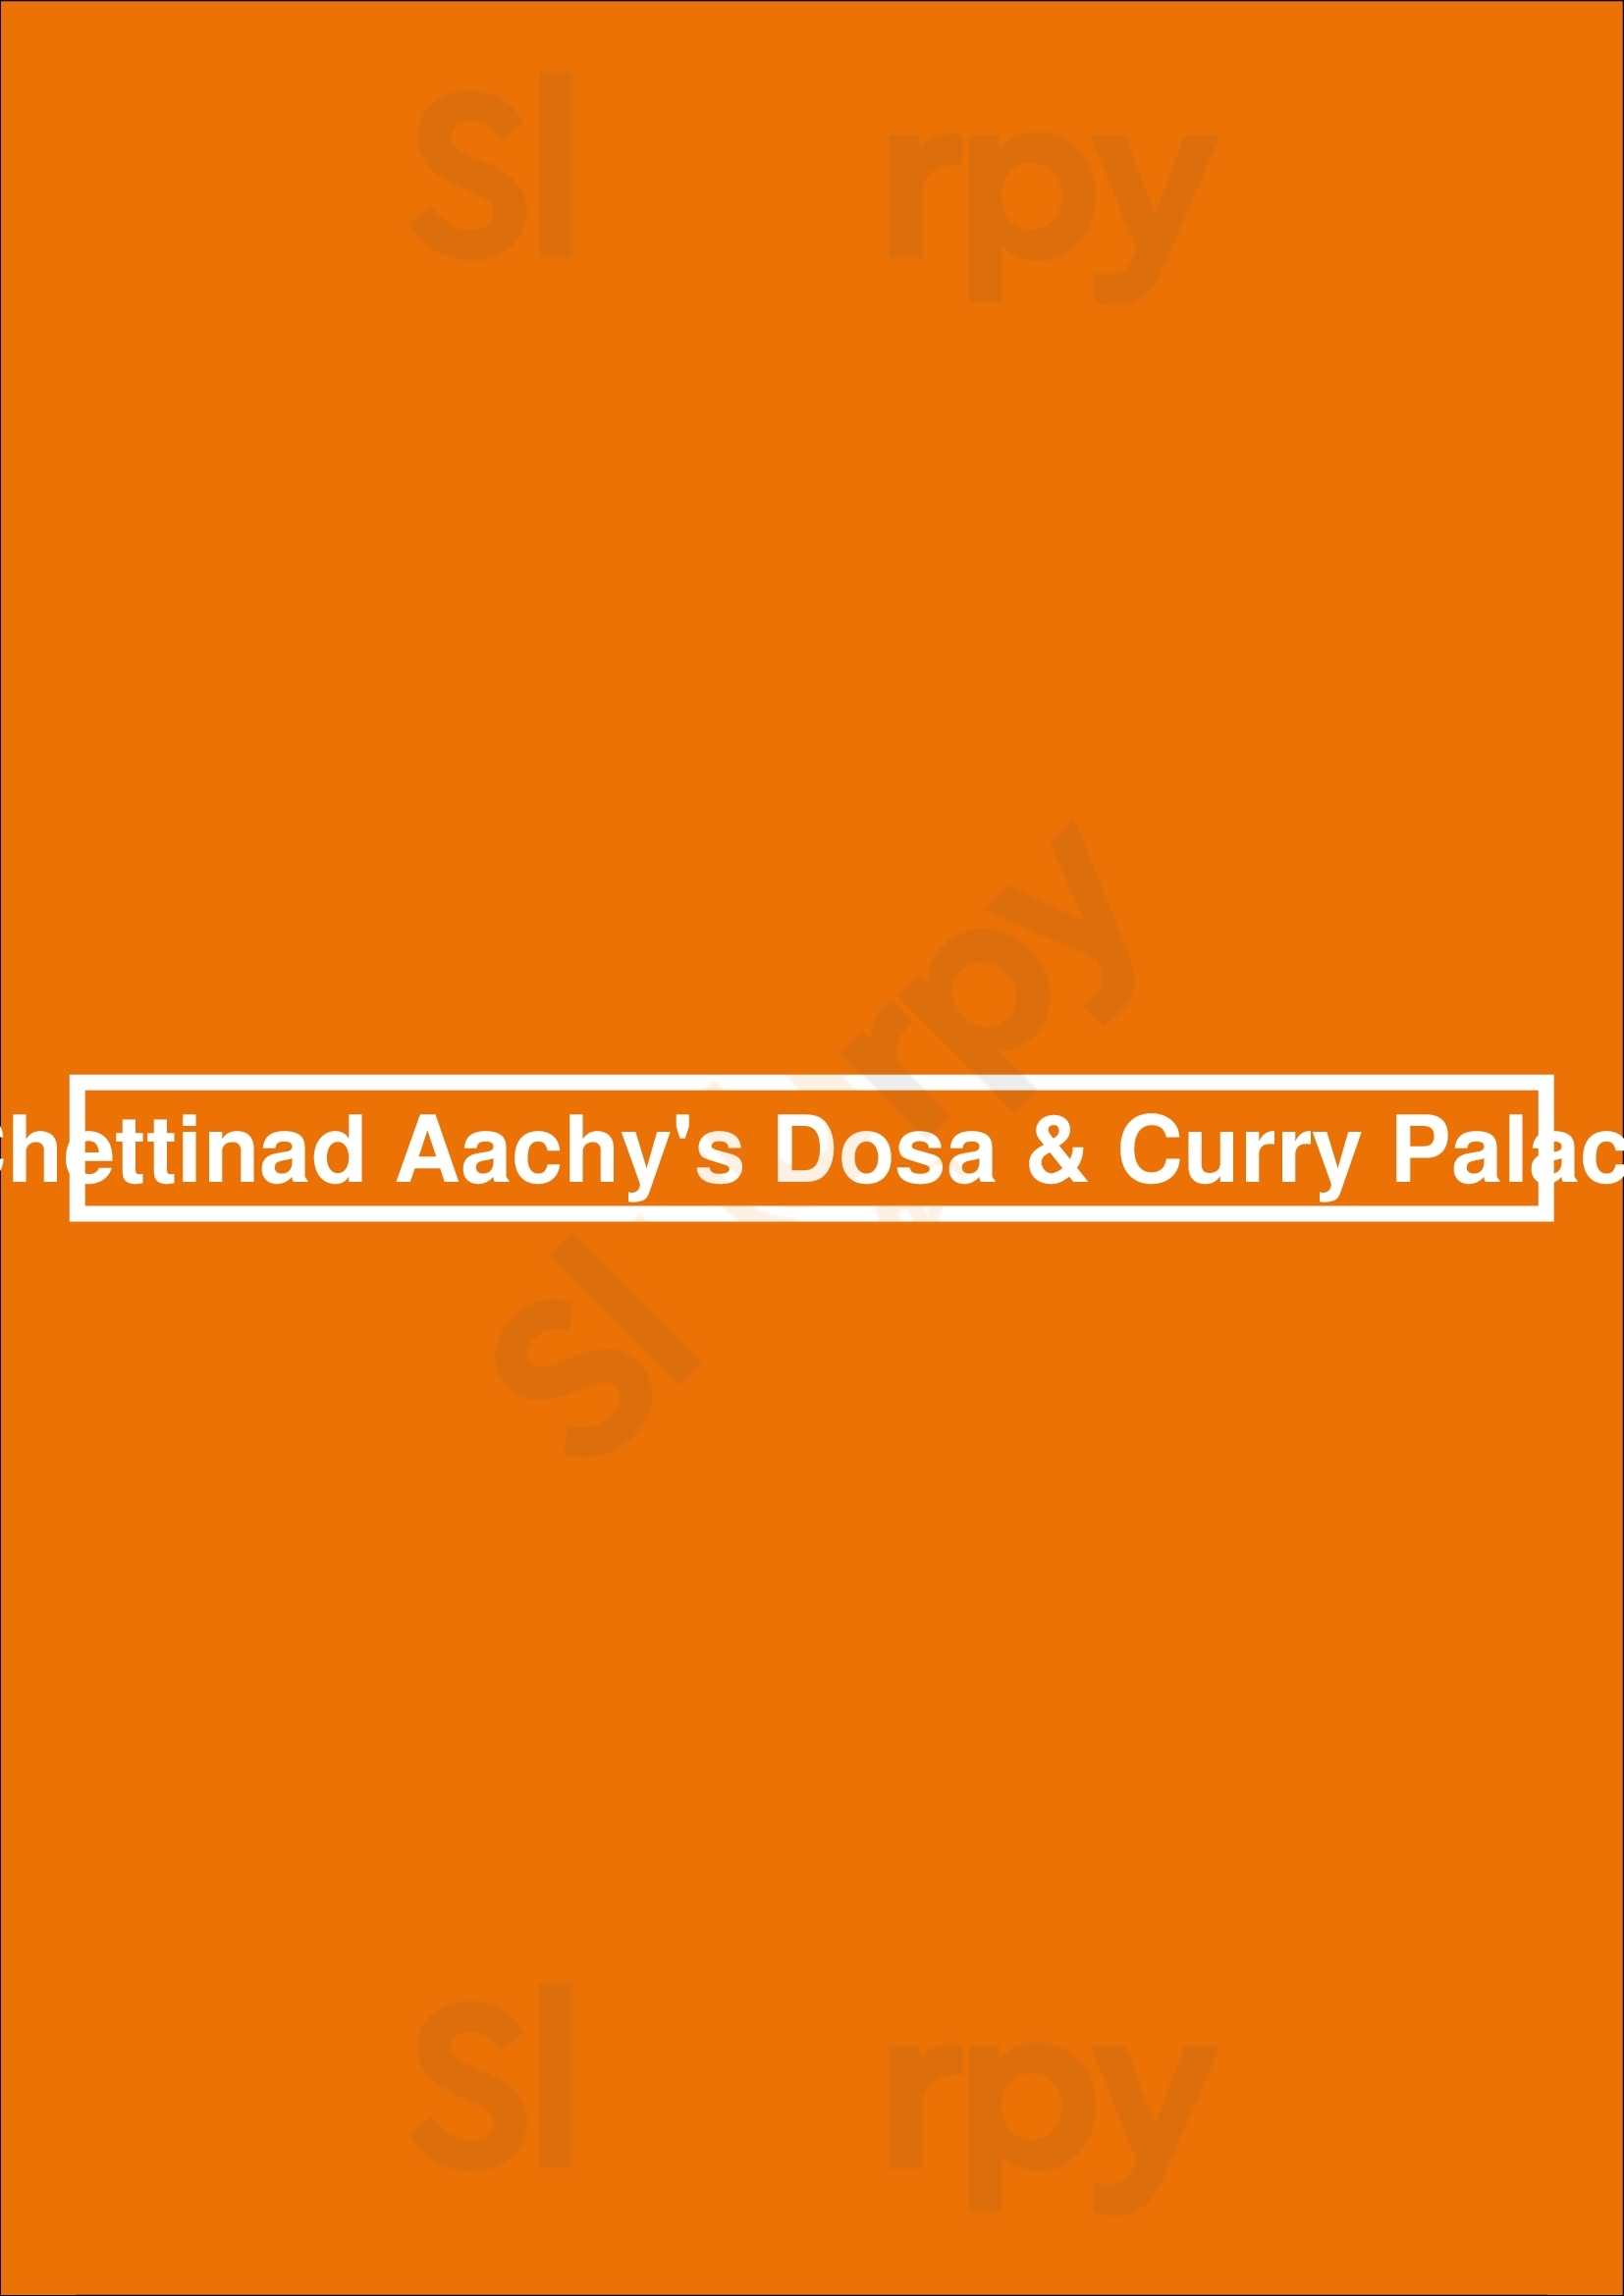 Chettinad Aachy's Dosa & Curry Palace Edmonton Menu - 1